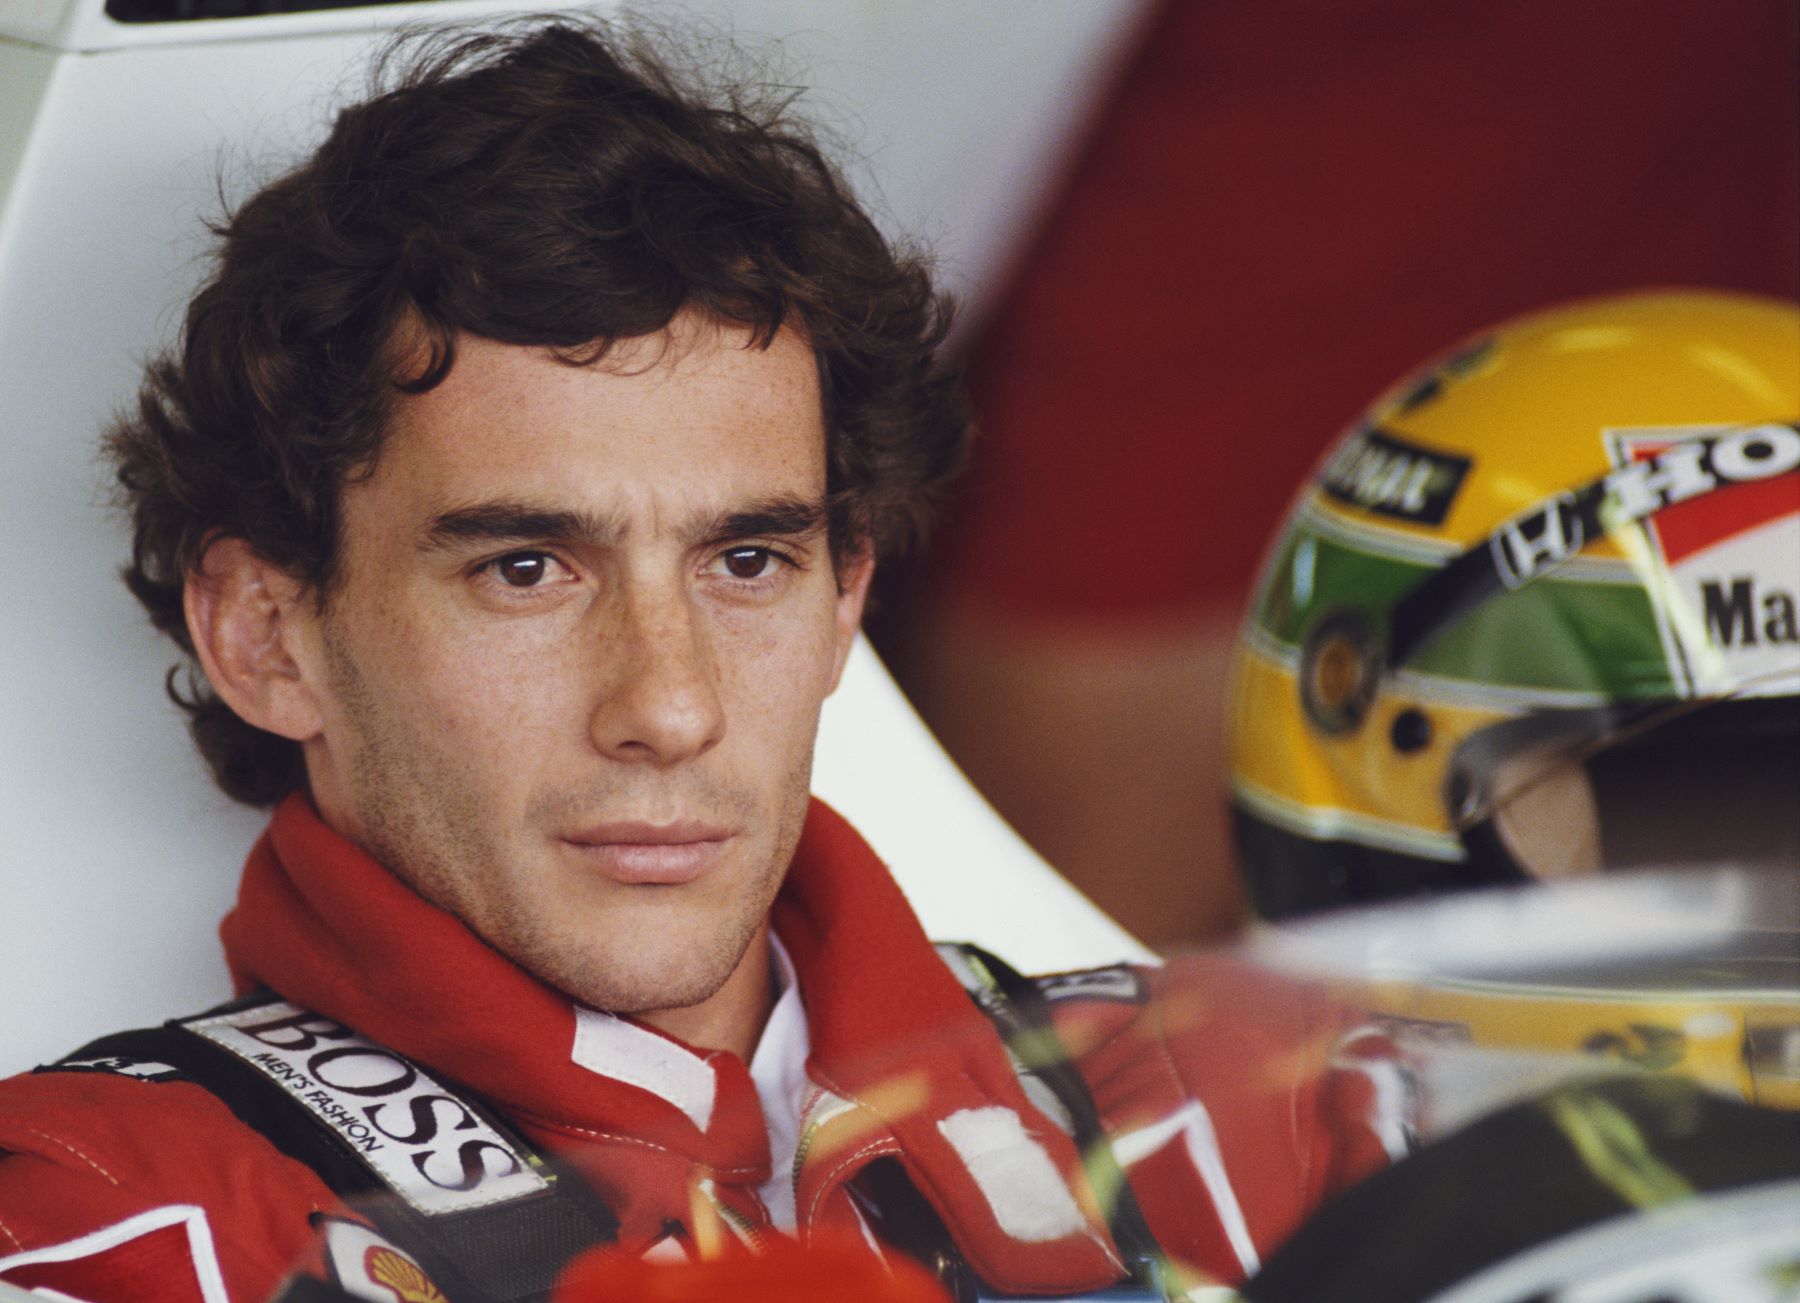 Ayrton Senna’s Tragic Death on the Track Changed Formula 1 Forever